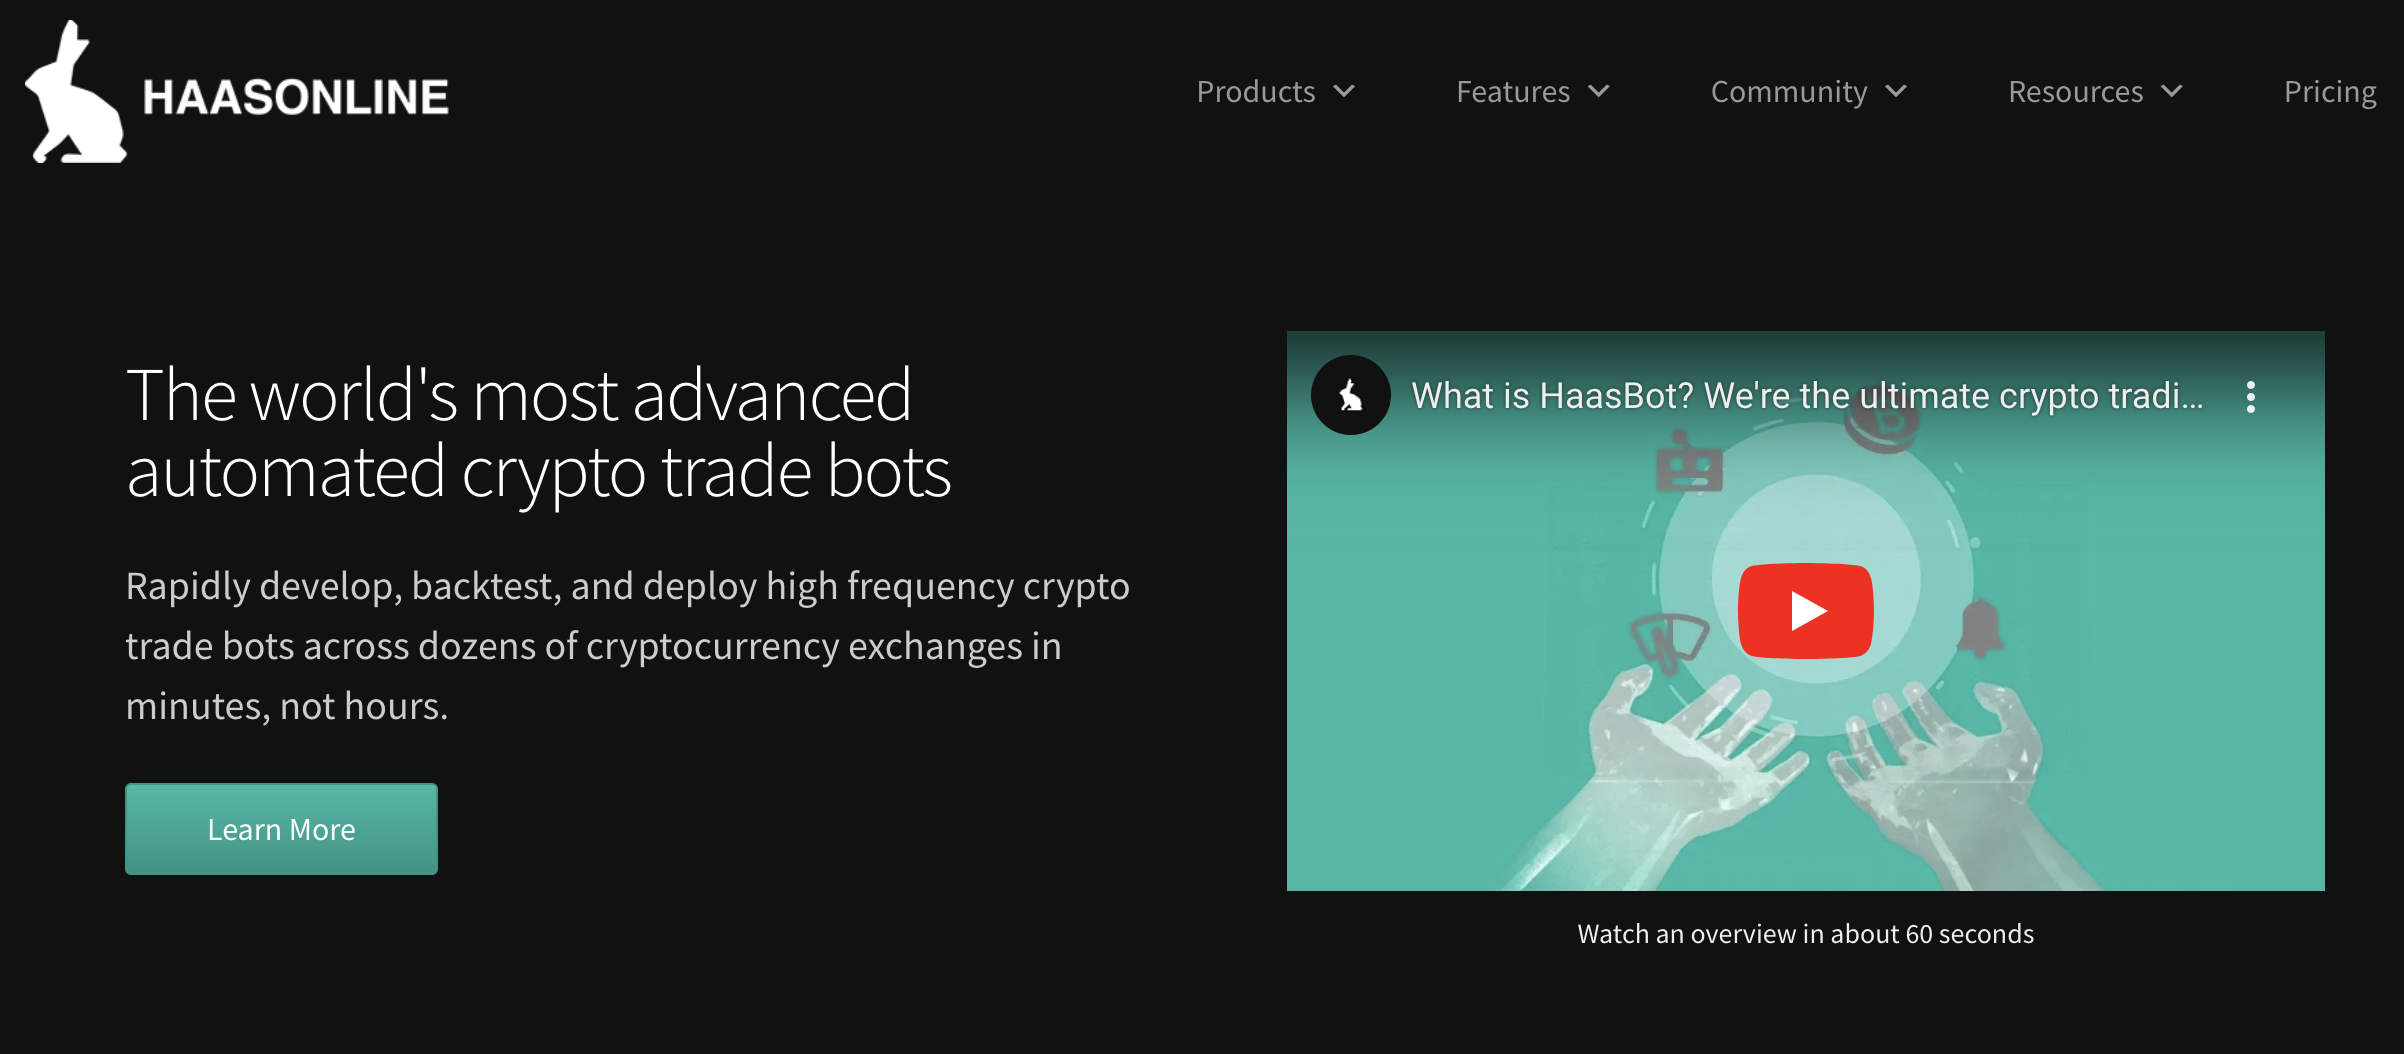 HaasOnline Automated Crypto Trading